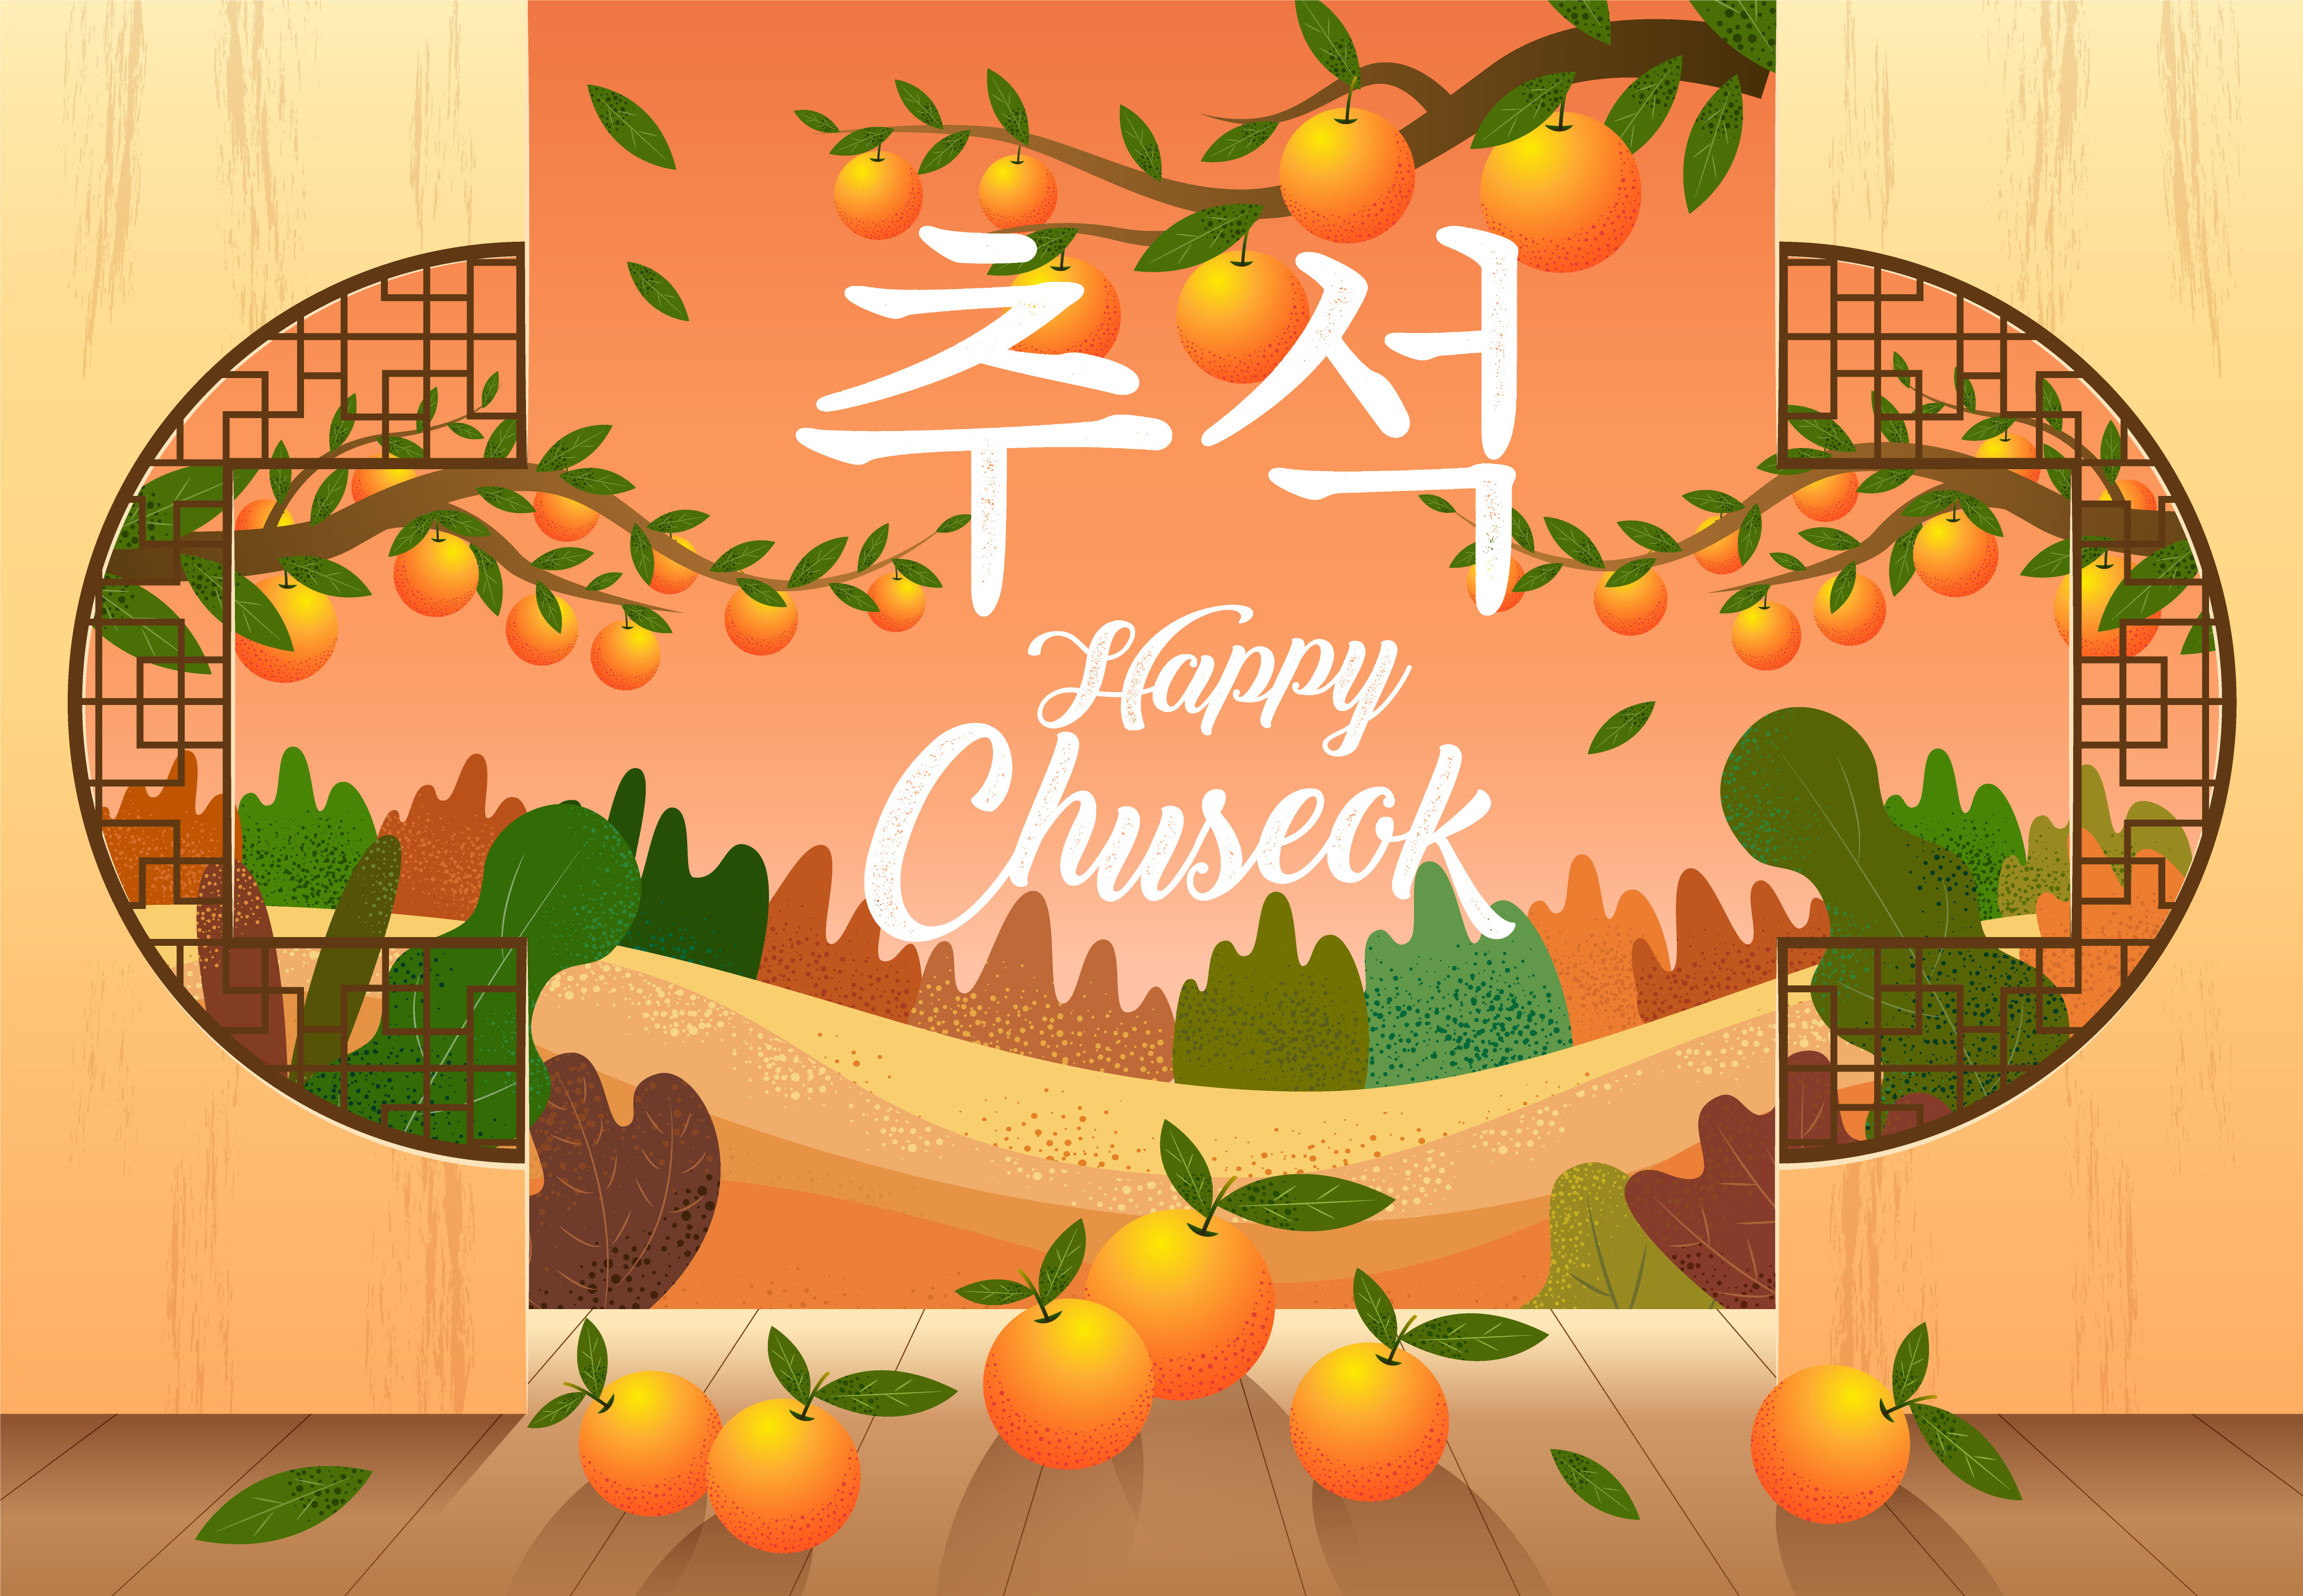 Chuseok is the korean harvest moon. Чусок корейский праздник. Фестиваль Чусок. Чусок праздник урожая. Корейский день Благодарения.